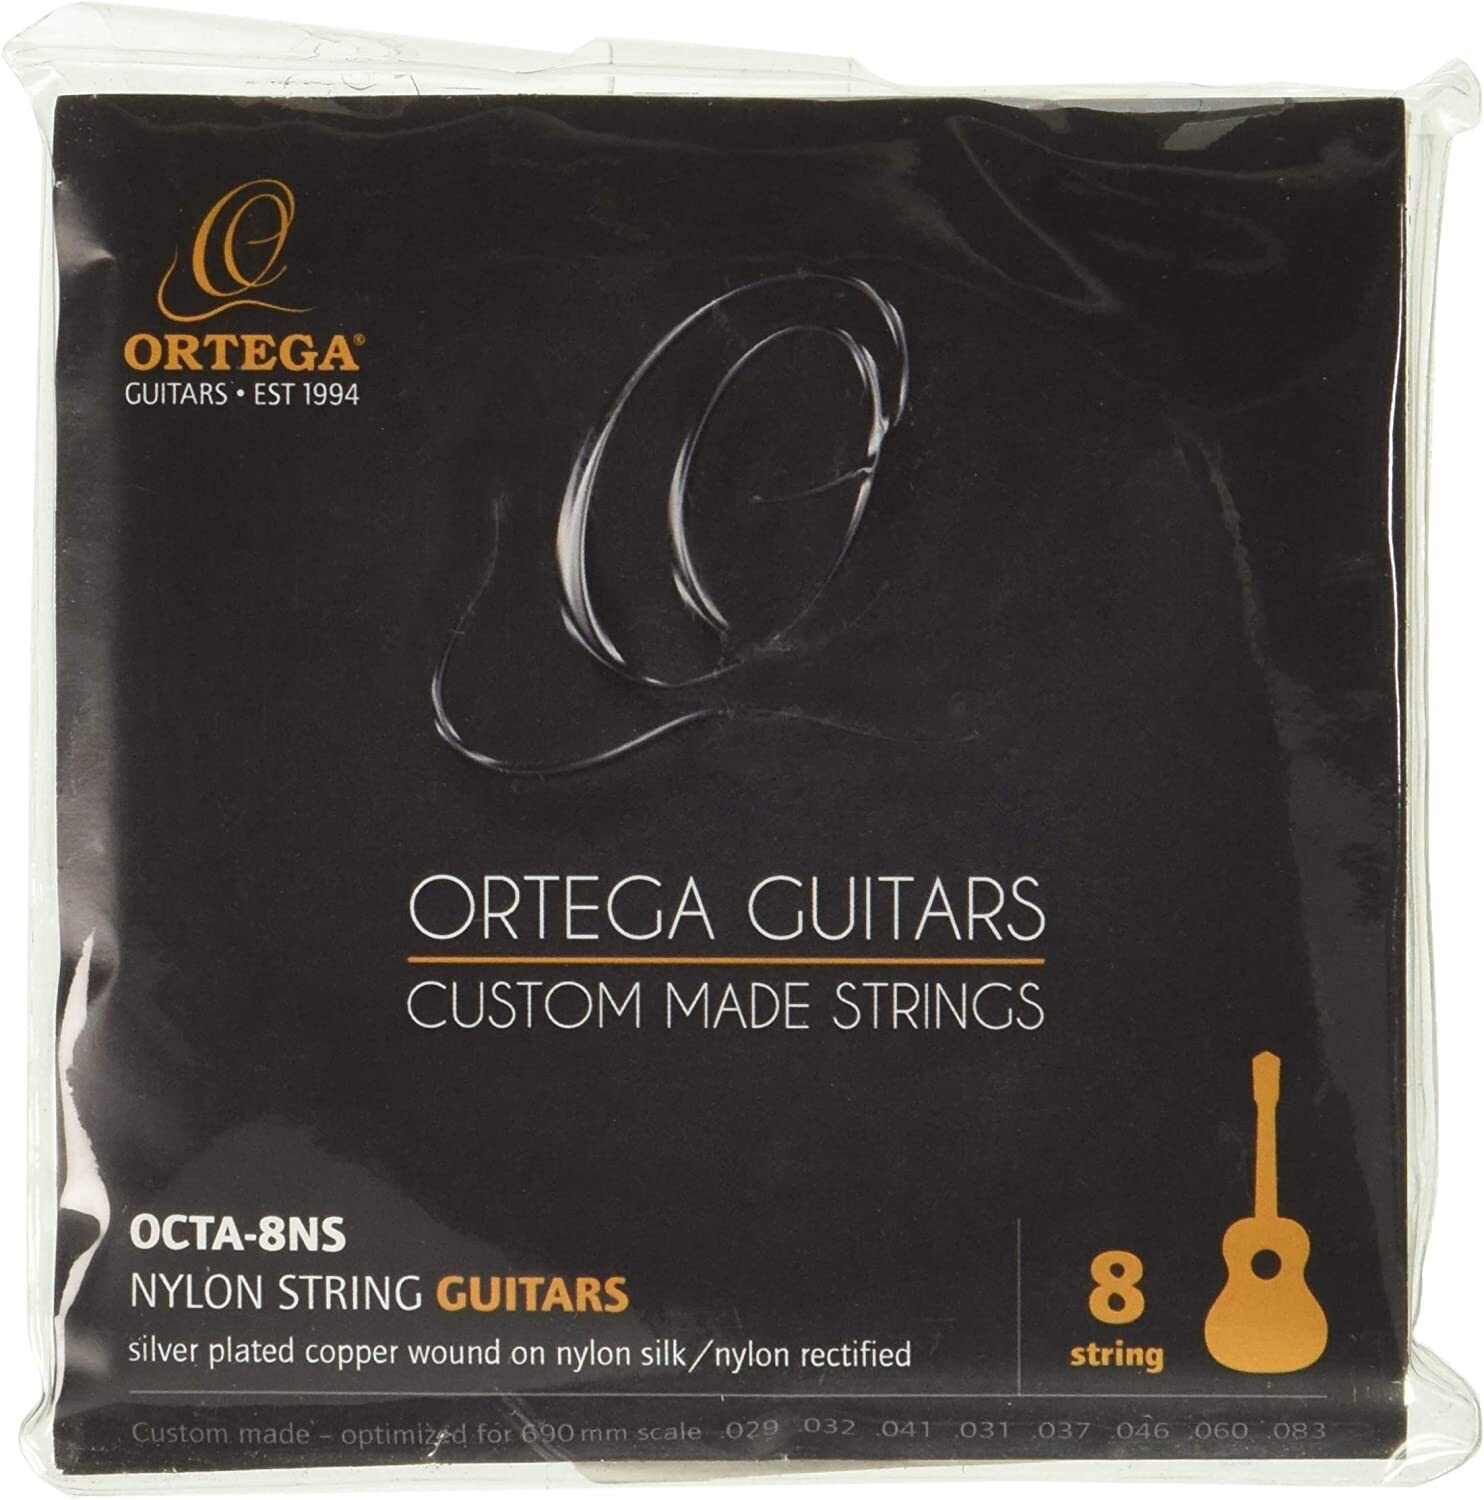 Ortega Guitars 8-Sting Nylon Guitar Strings - Tenor - Made in Germany (OCTA-8NS)